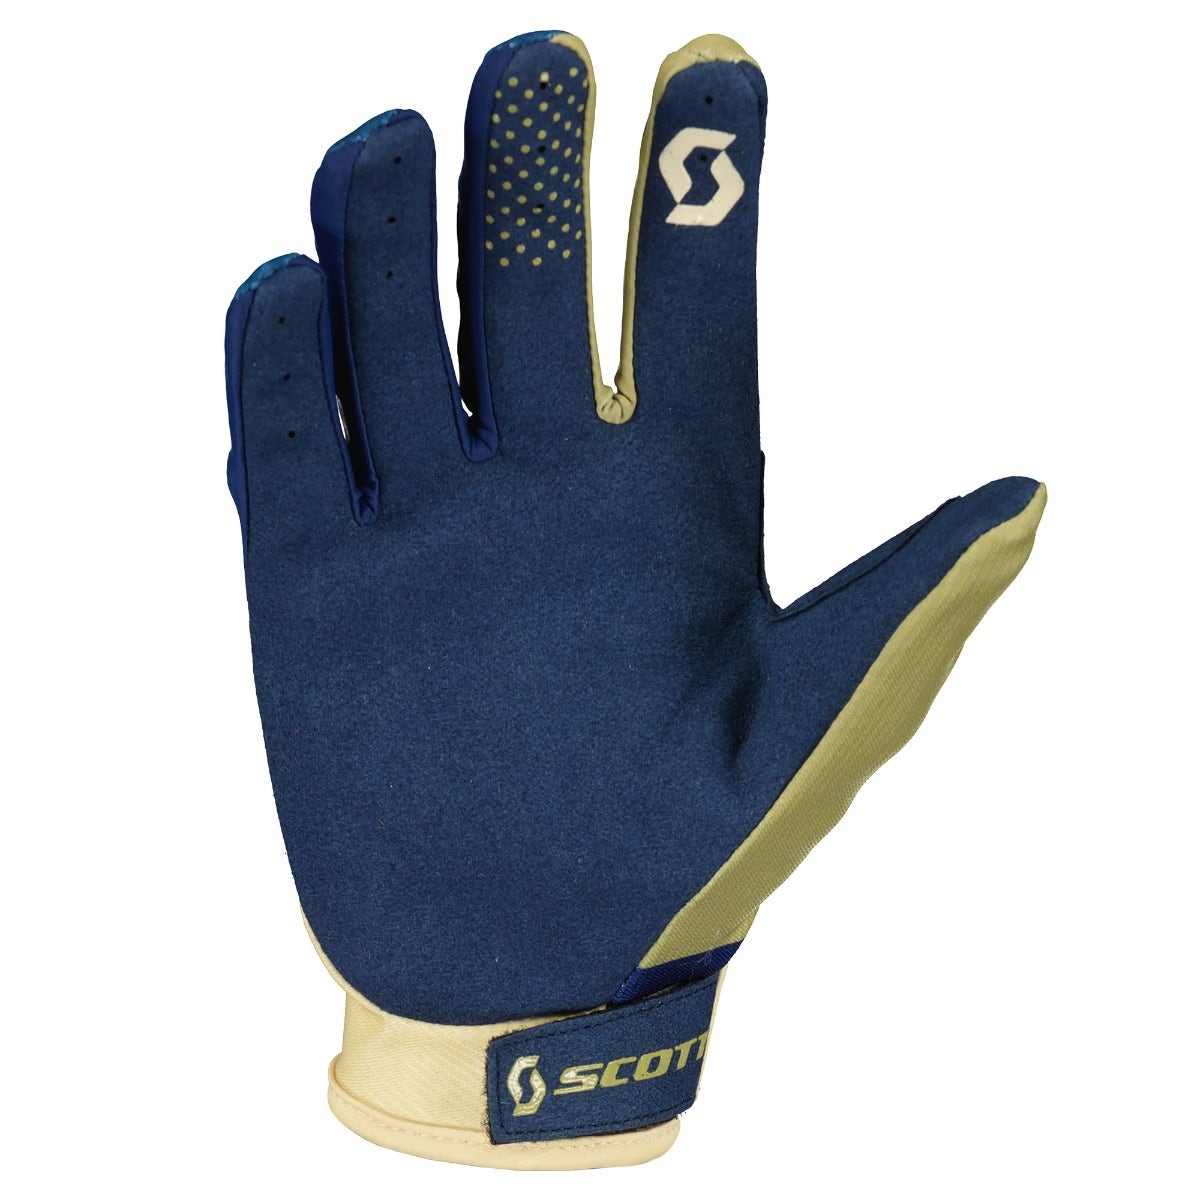 Scott 350 Track Evo Glove Tan/Blue